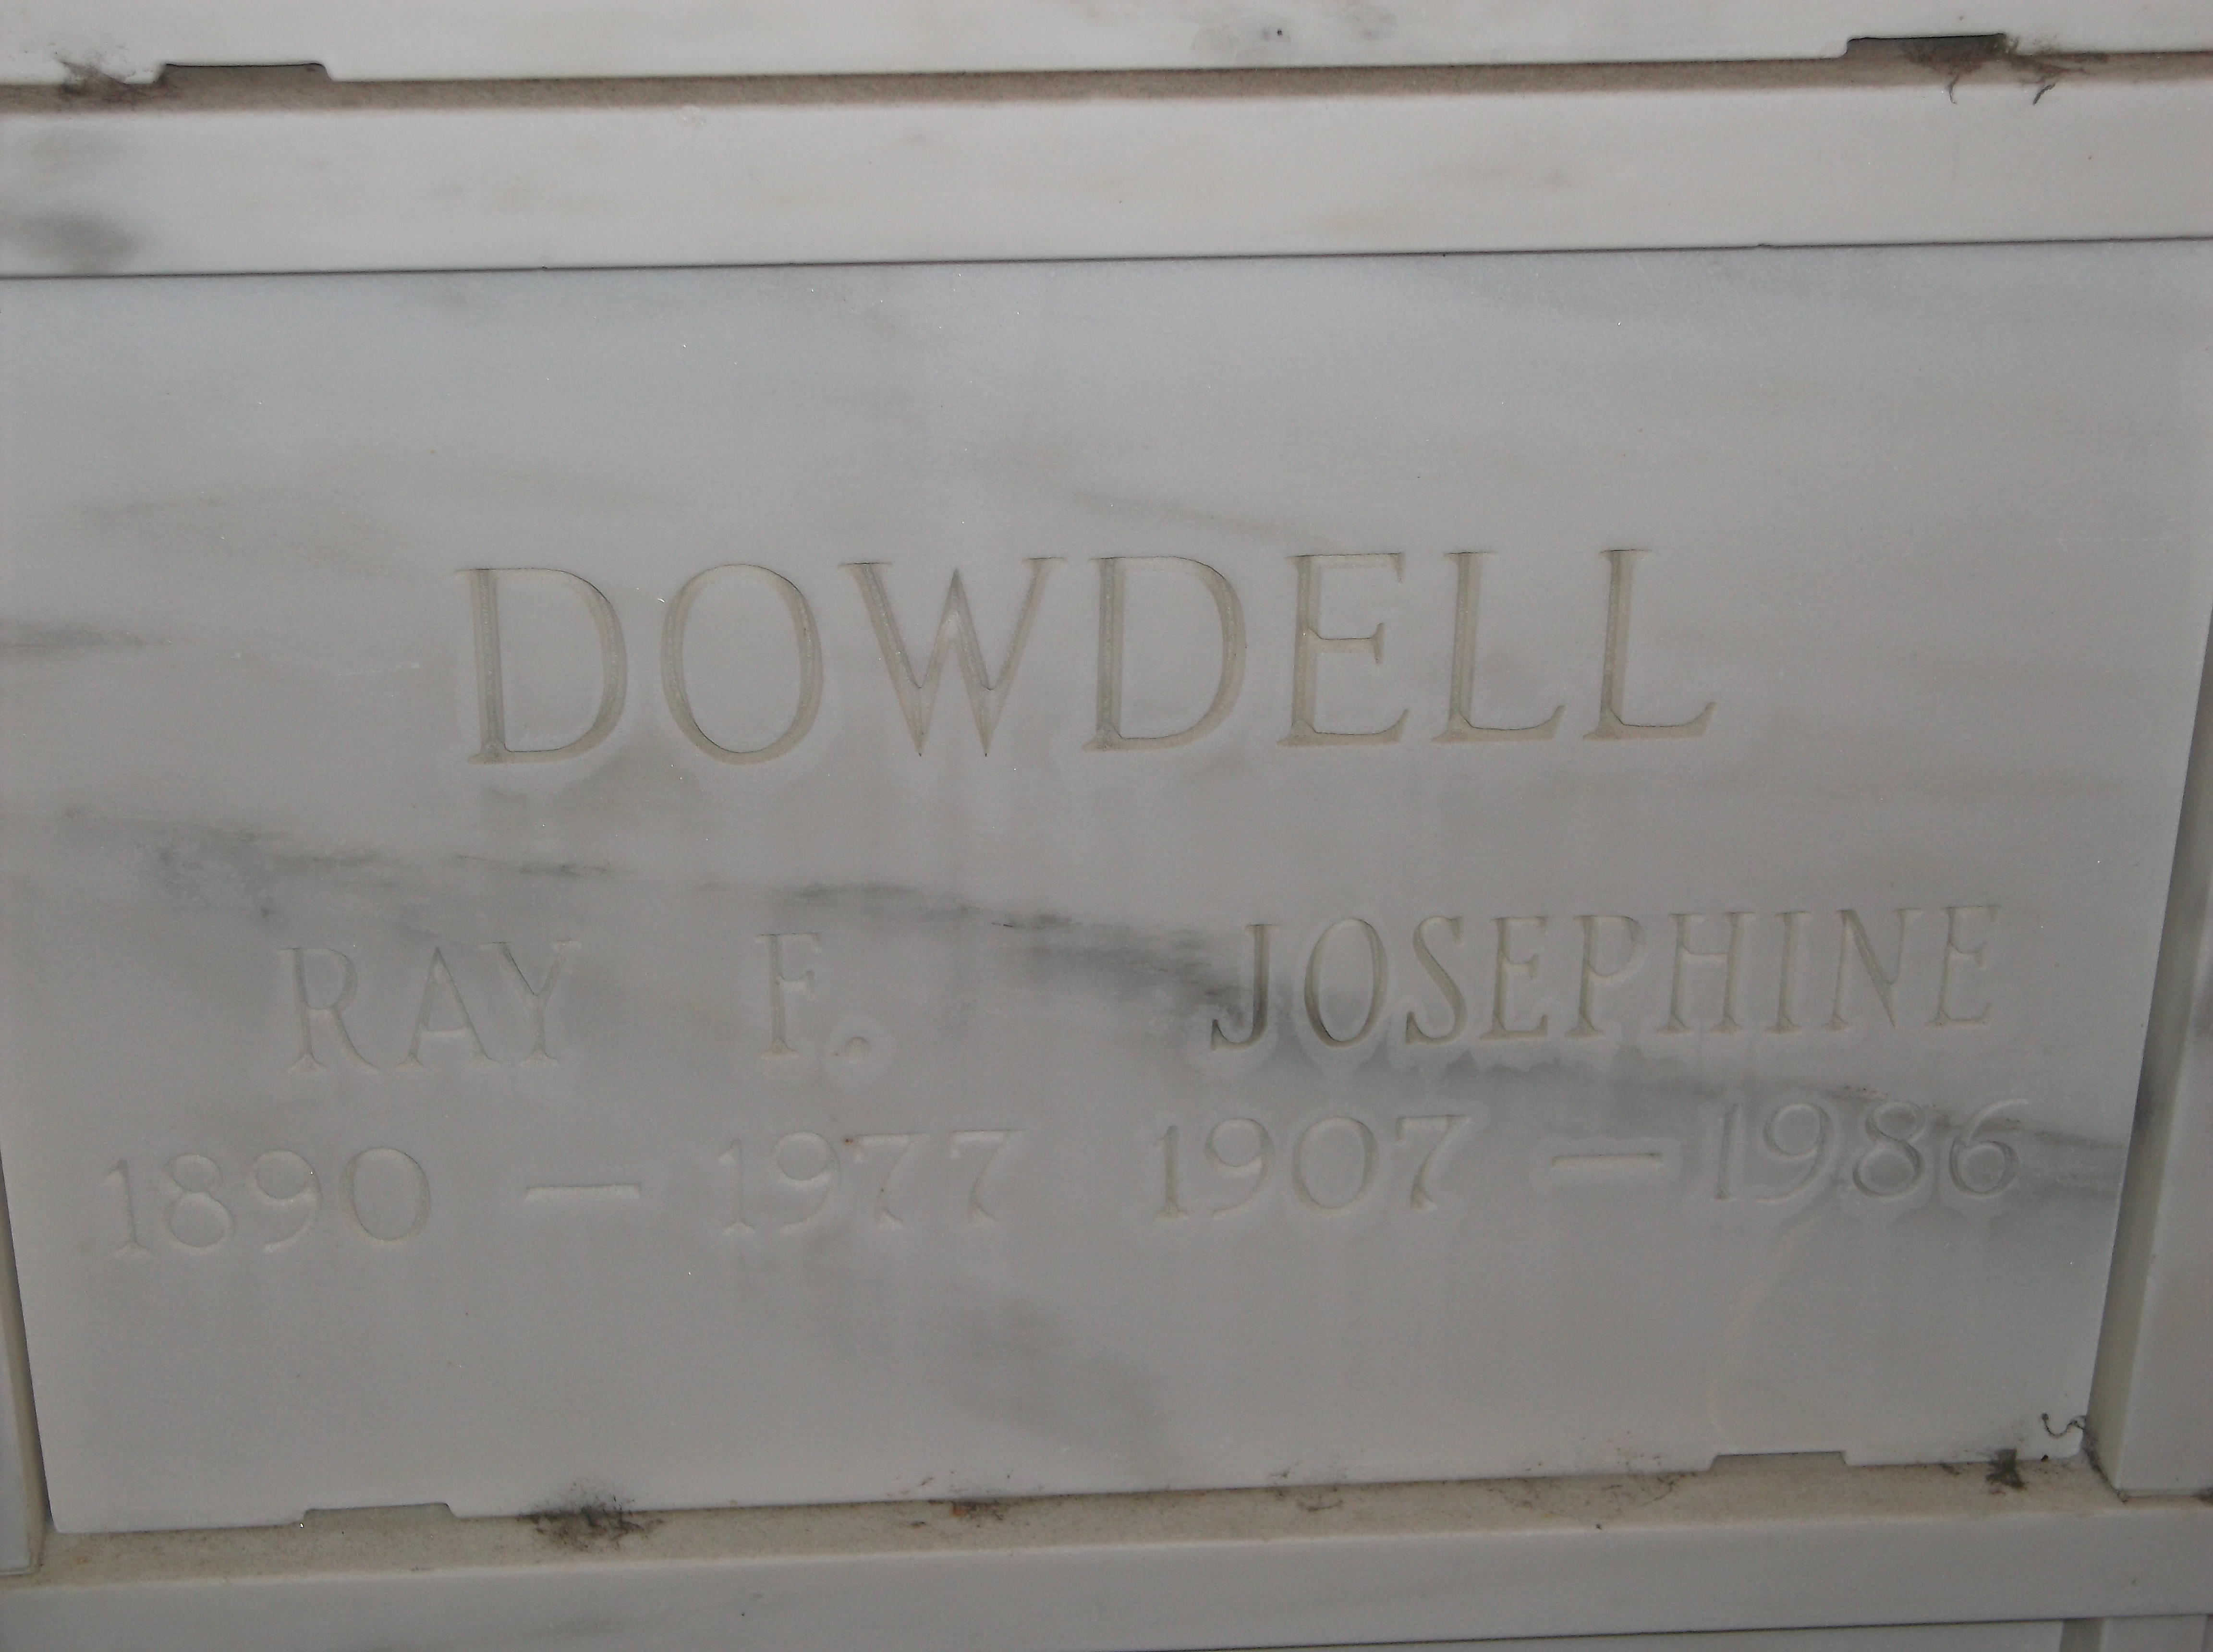 Josephine Dowdell